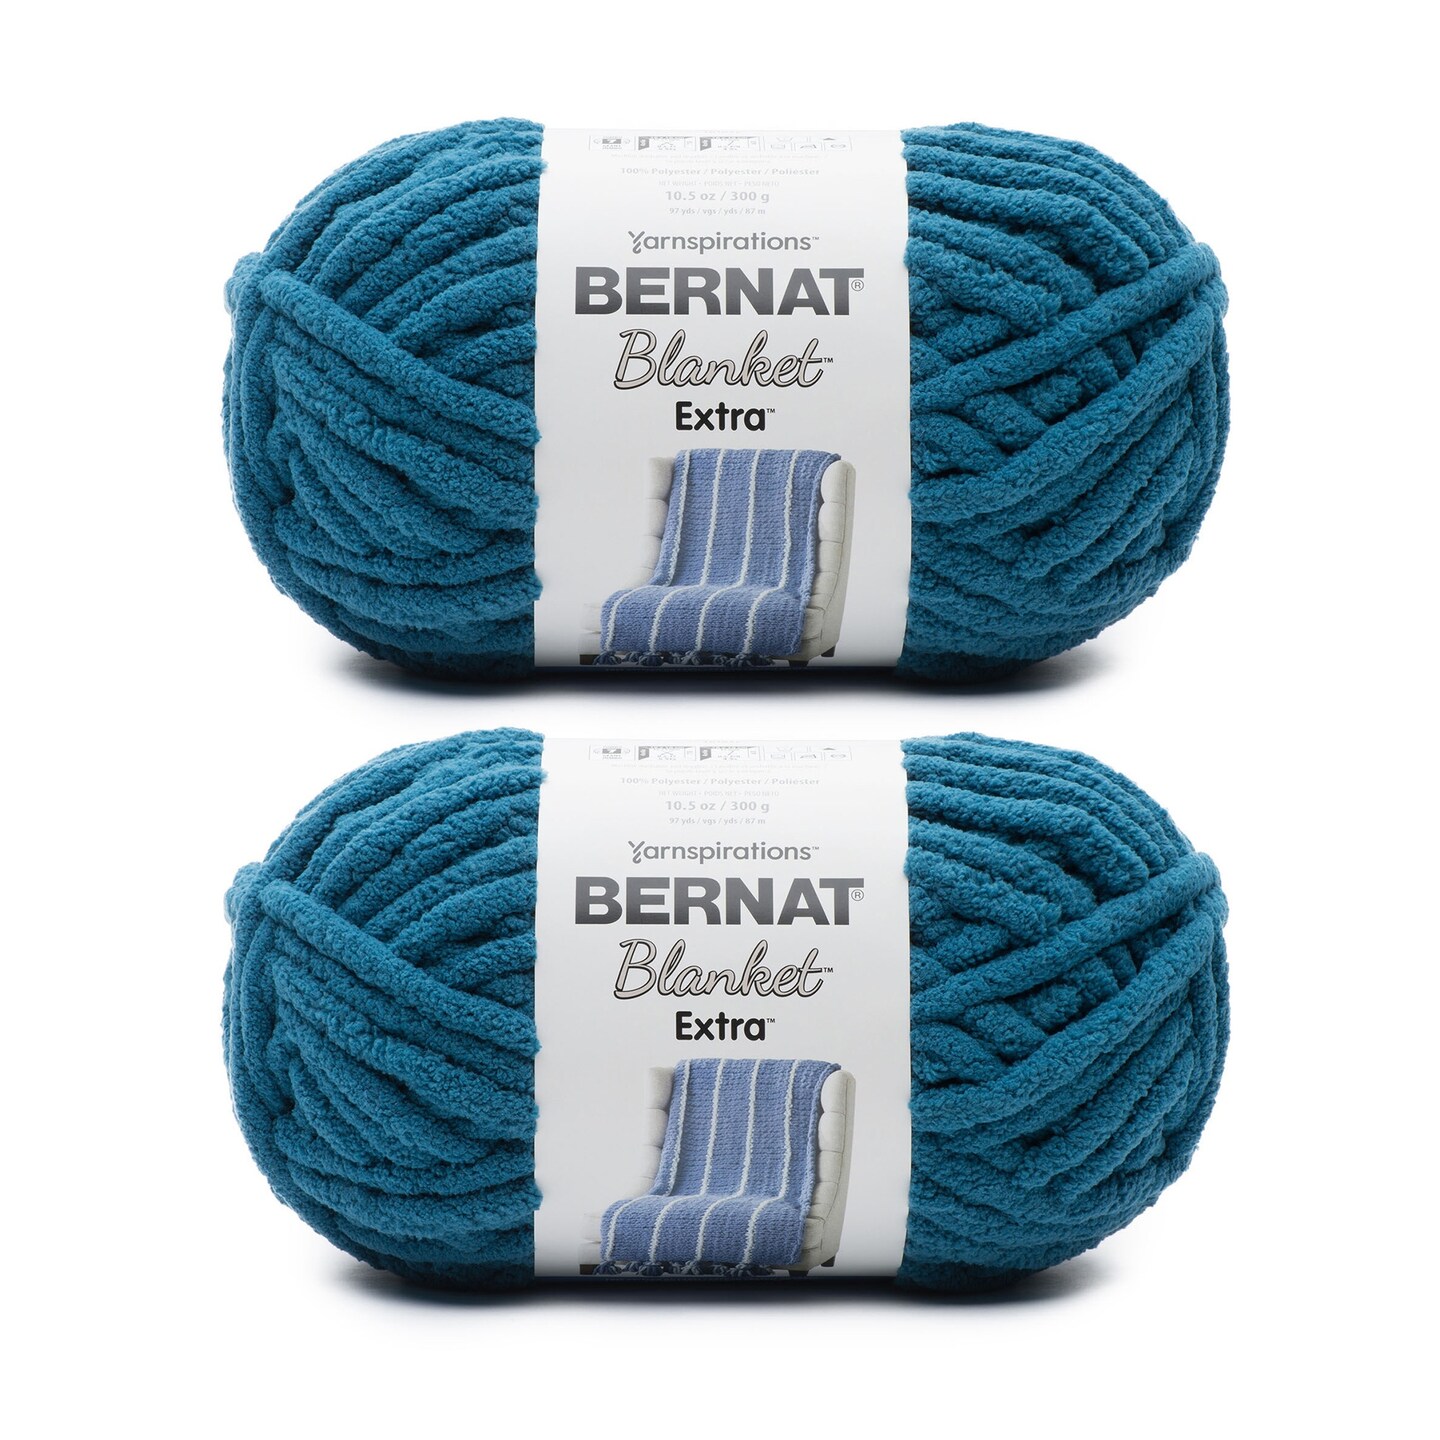 Bernat Blanket Extra Yarn